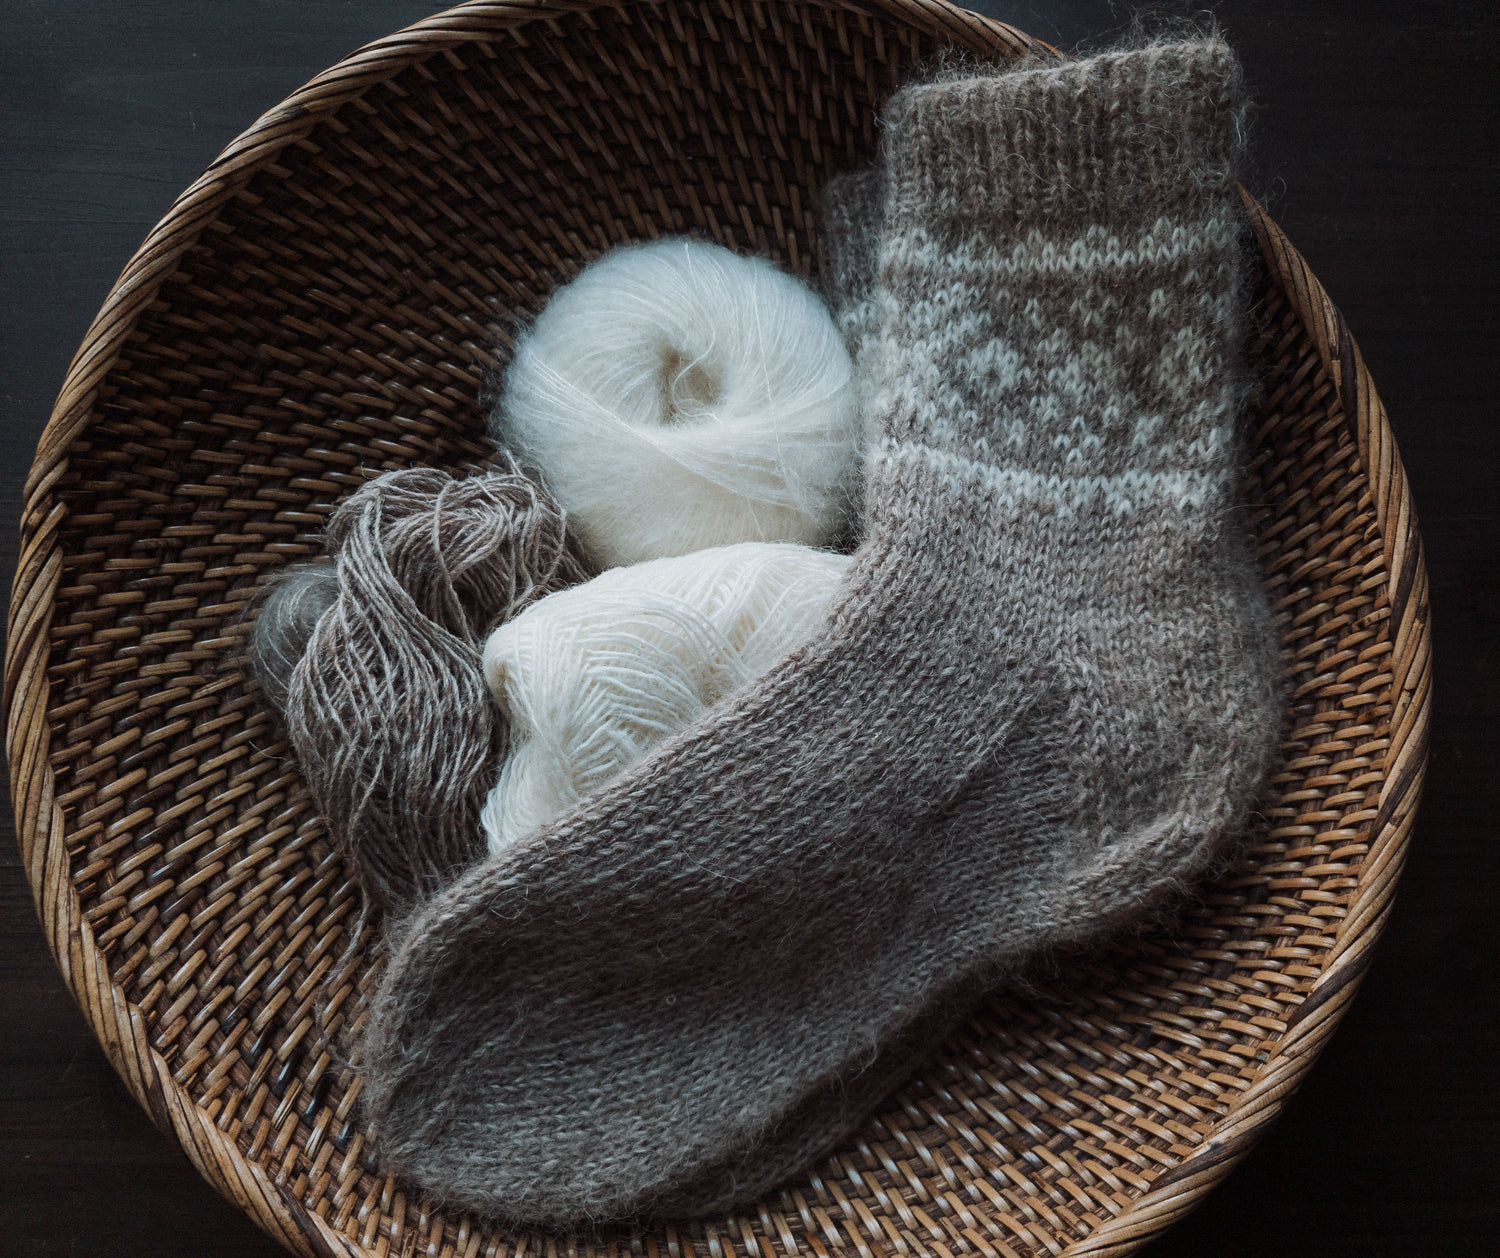 Hand-knit Arctic Sun socks and yarn in a woven basket.